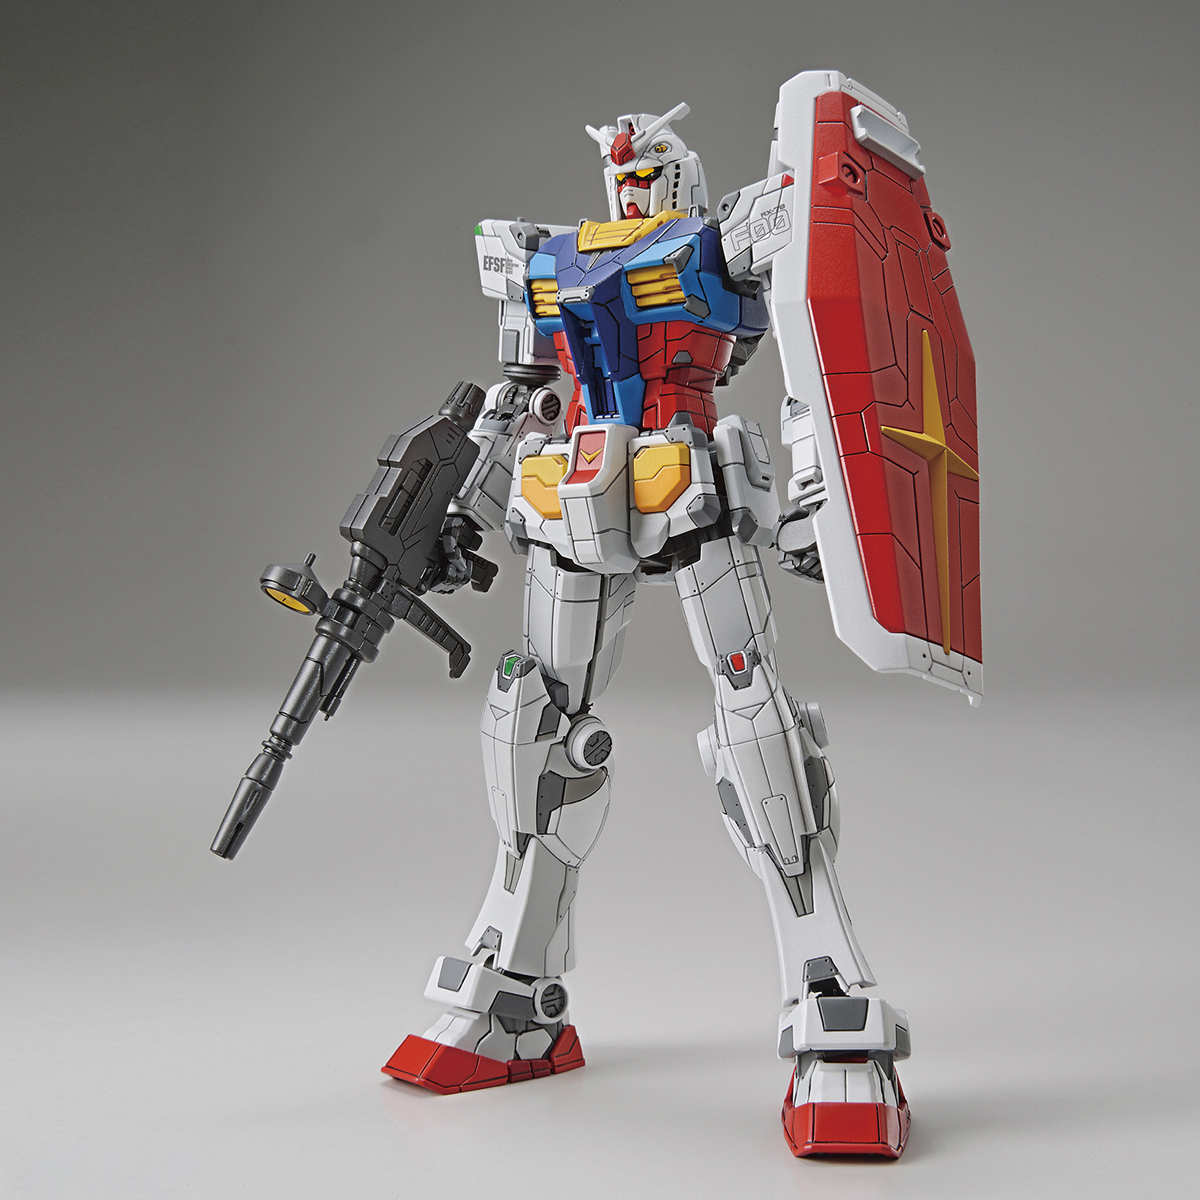 HG 1/144 Gundam Factory Yokohama RX-78F00 & G-Dock Premium Bandai  model kit PB 